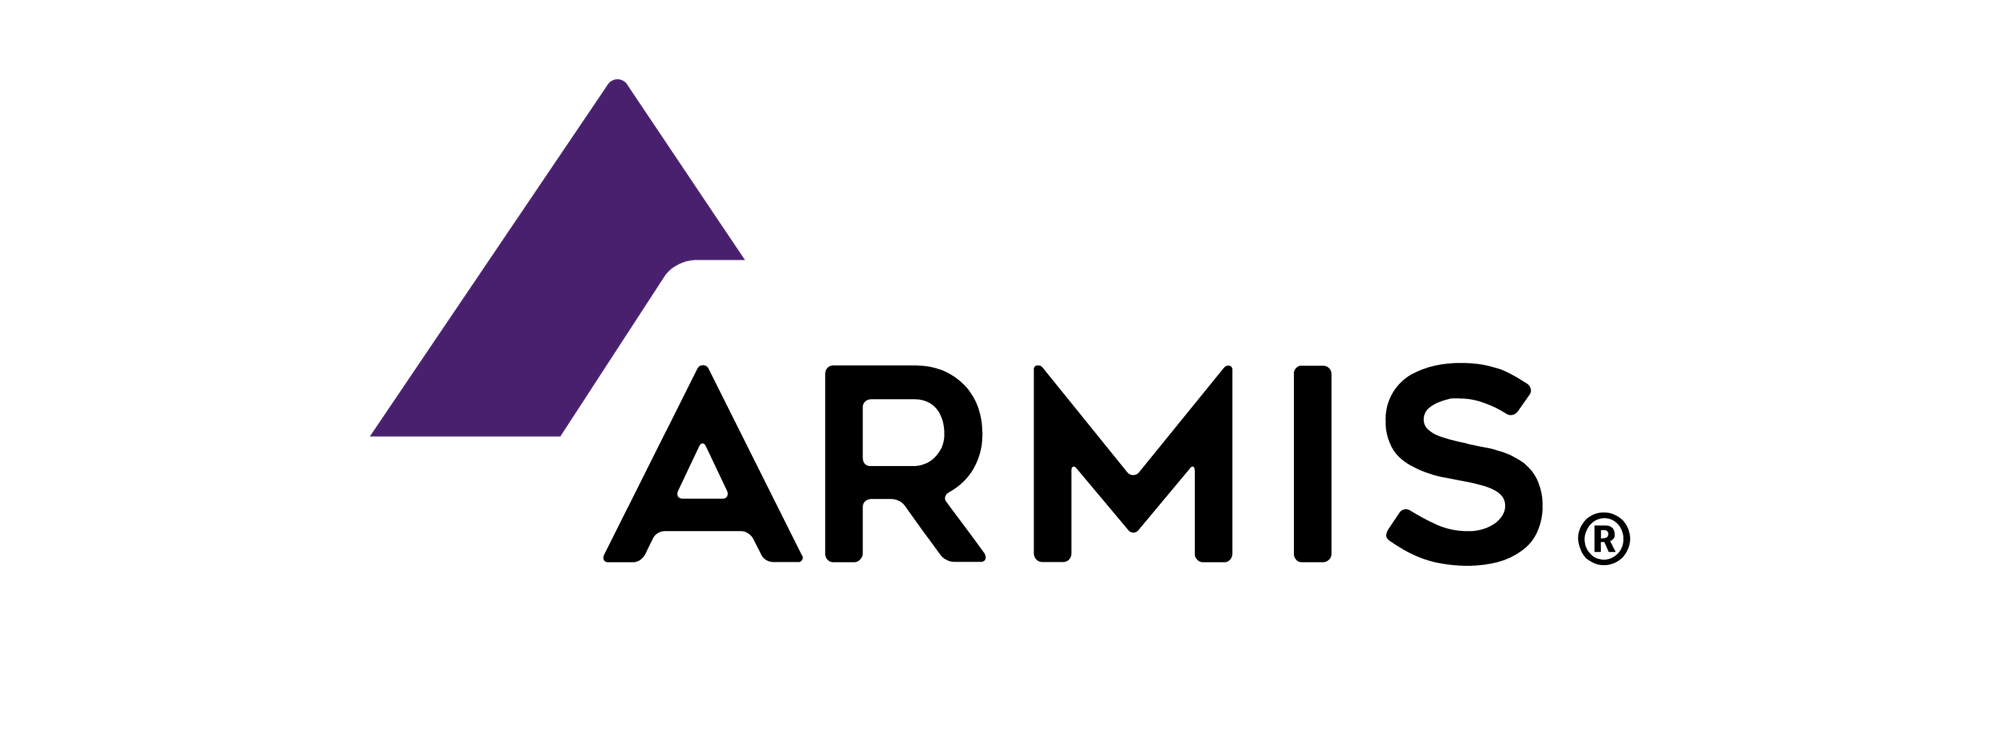 Summit-sponsor-armis